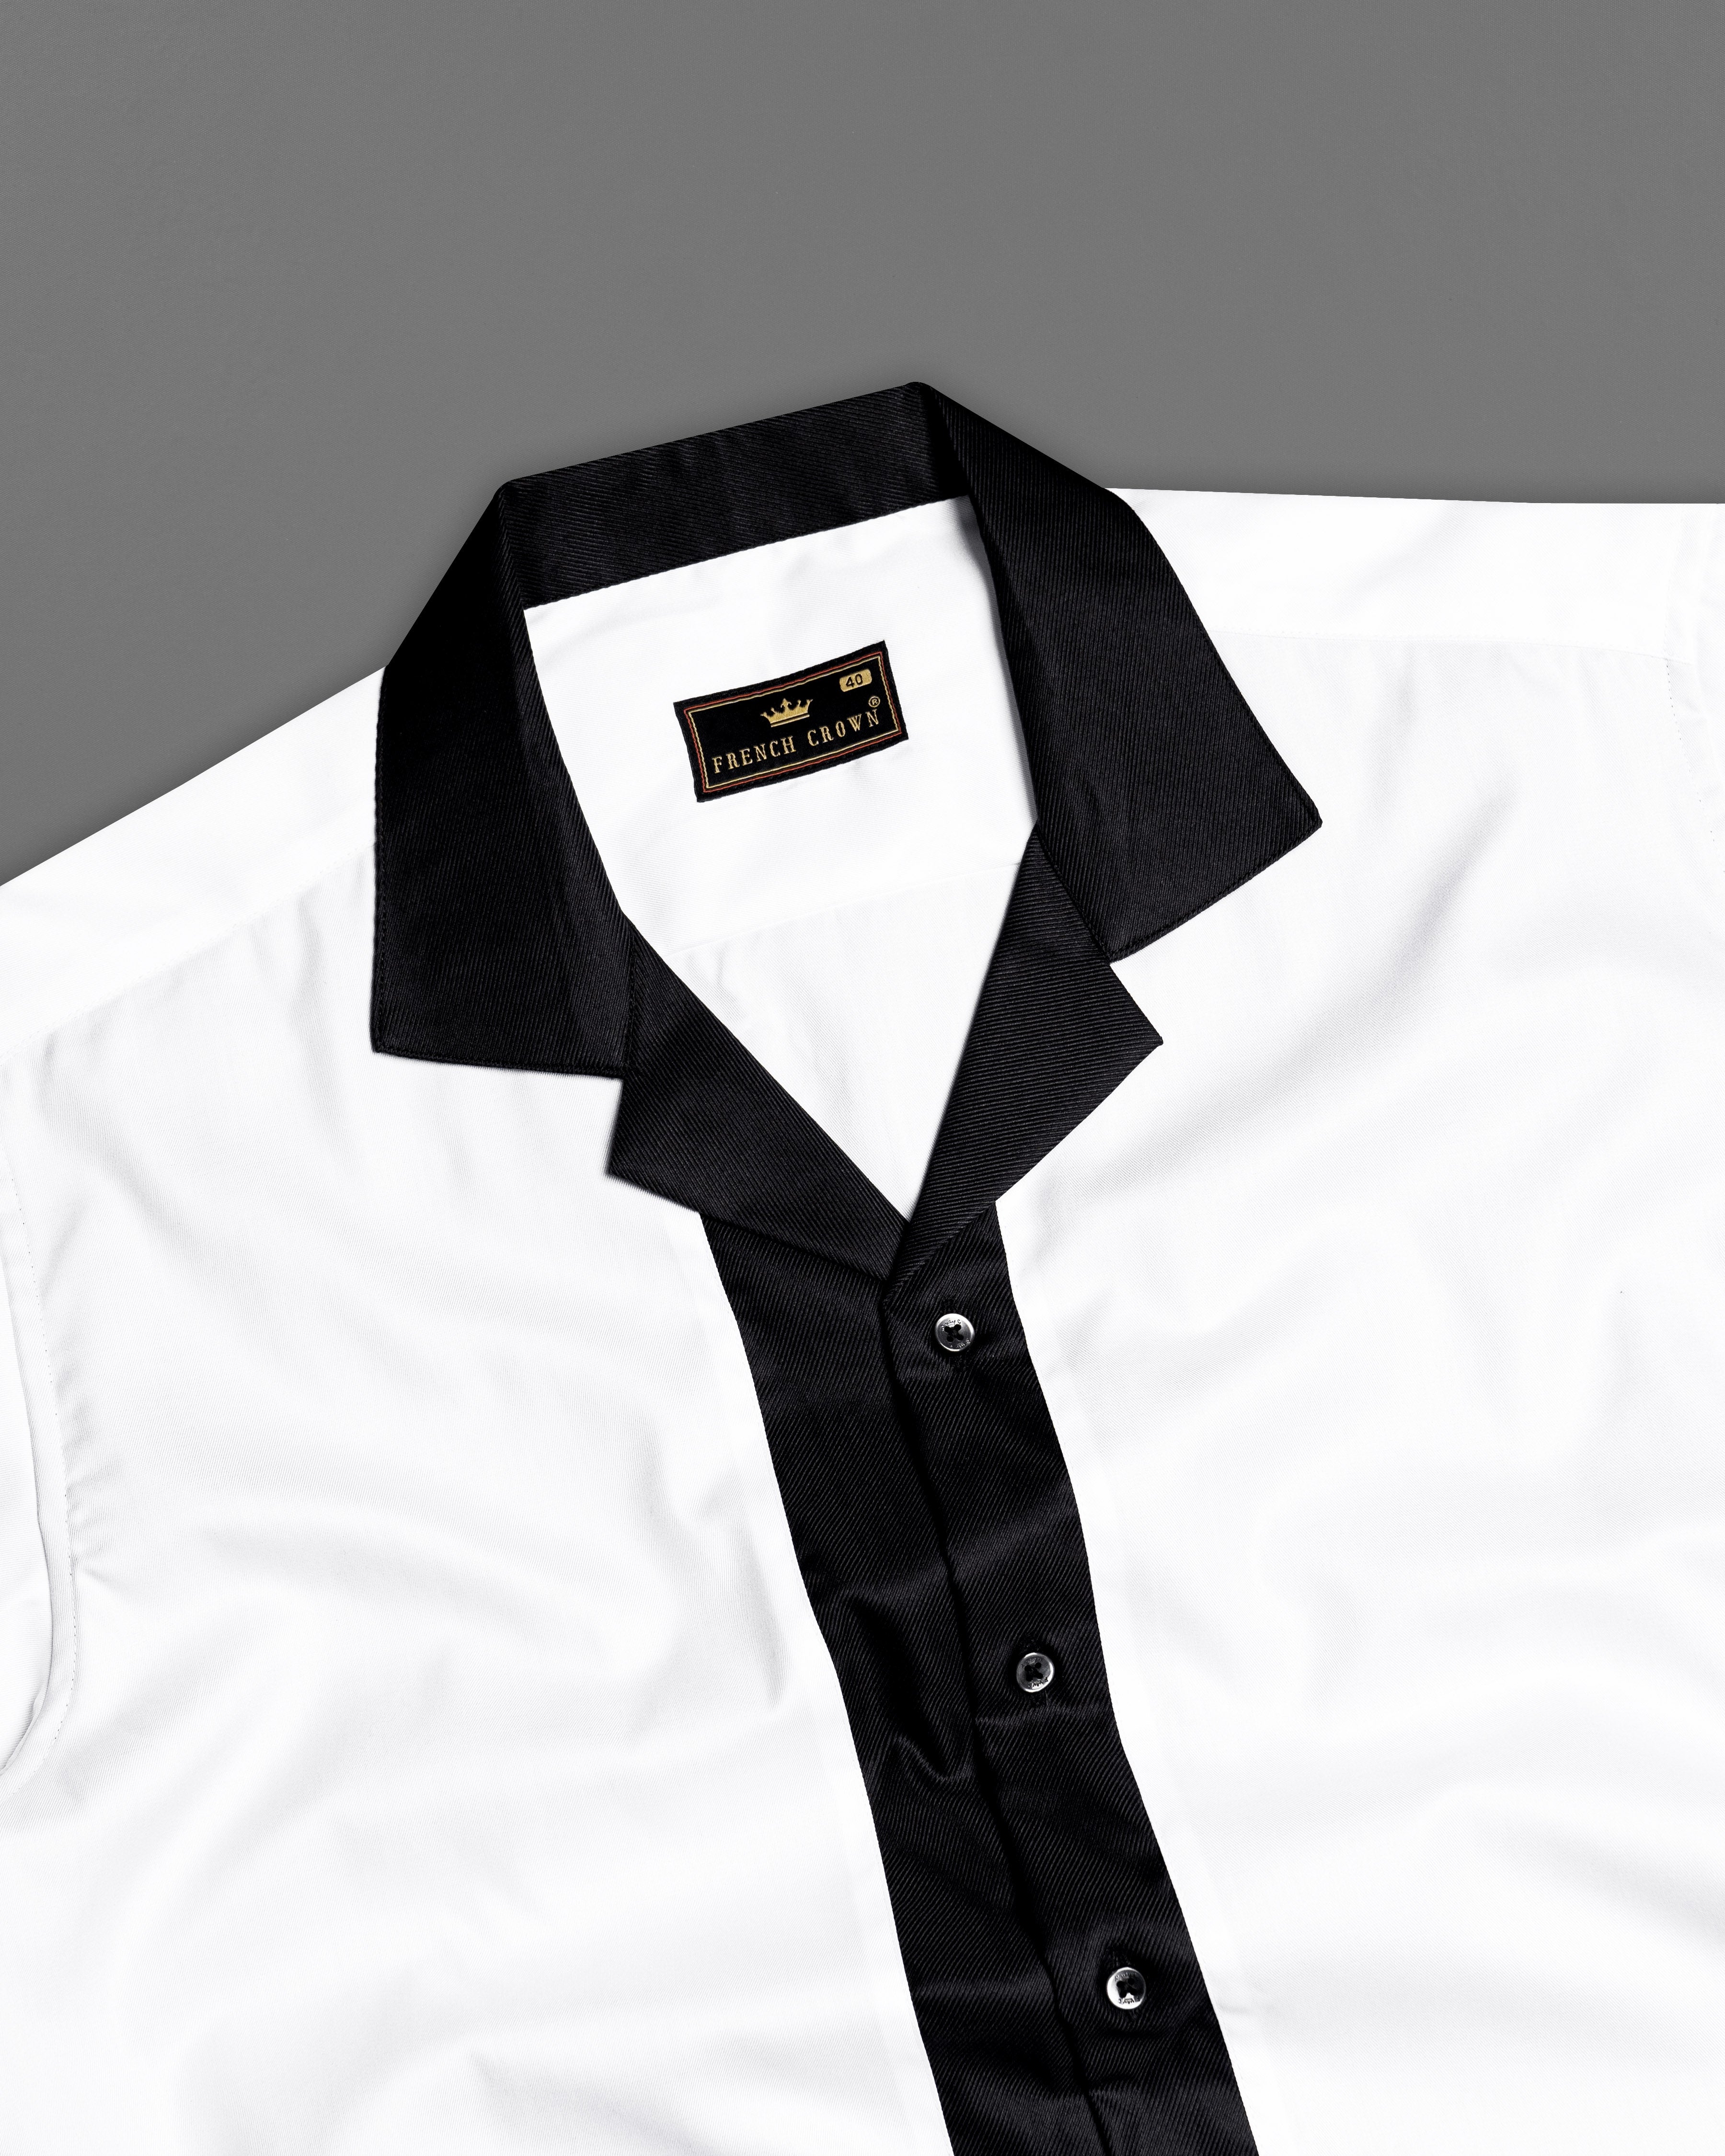 Bright White with Black Royal Oxford Designer Half Sleeves Shirt 9477-CC-BLK-P598-SS-38, 9477-CC-BLK-P598-SS-39, 9477-CC-BLK-P598-SS-40, 9477-CC-BLK-P598-SS-42, 9477-CC-BLK-P598-SS-44, 9477-CC-BLK-P598-SS-46, 9477-CC-BLK-P598-SS-48, 9477-CC-BLK-P598-SS-50, 9477-CC-BLK-P598-SS-52